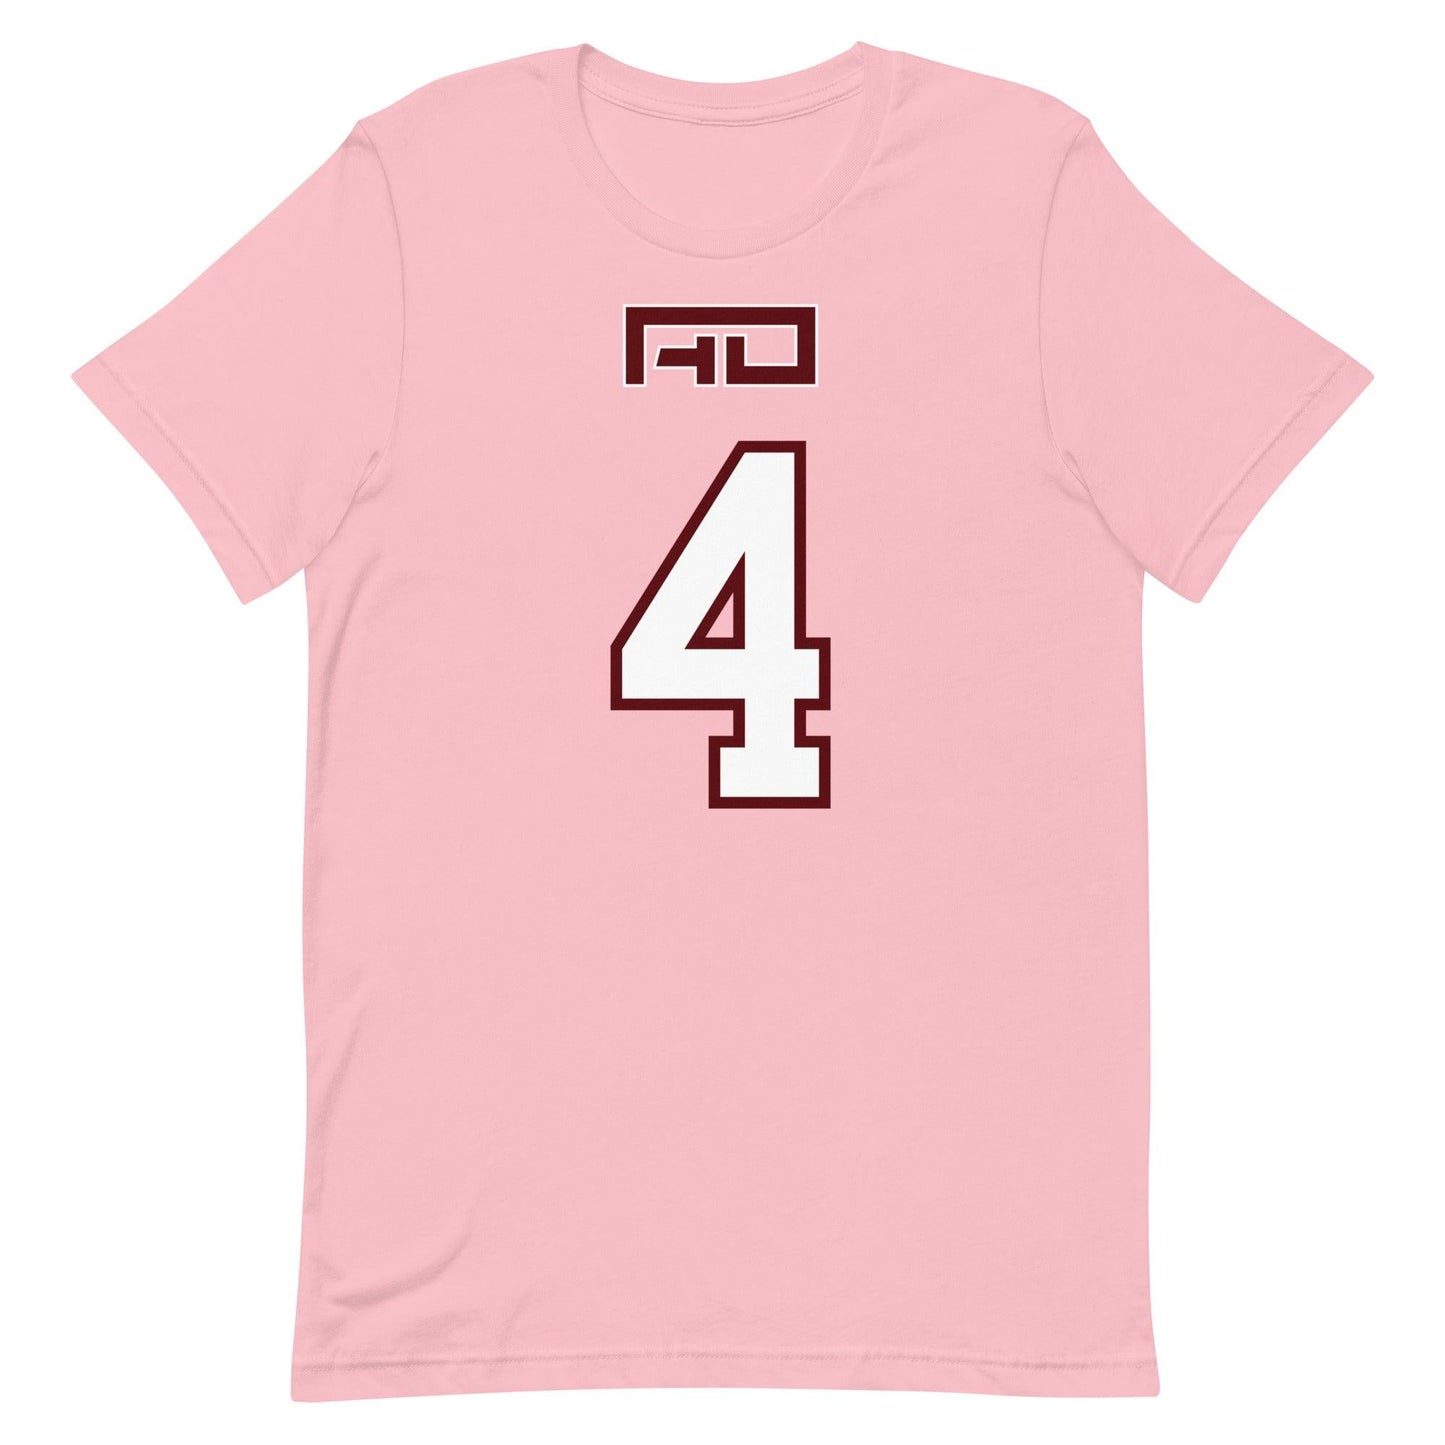 Amari Daniels "Jersey" t-shirt - Fan Arch